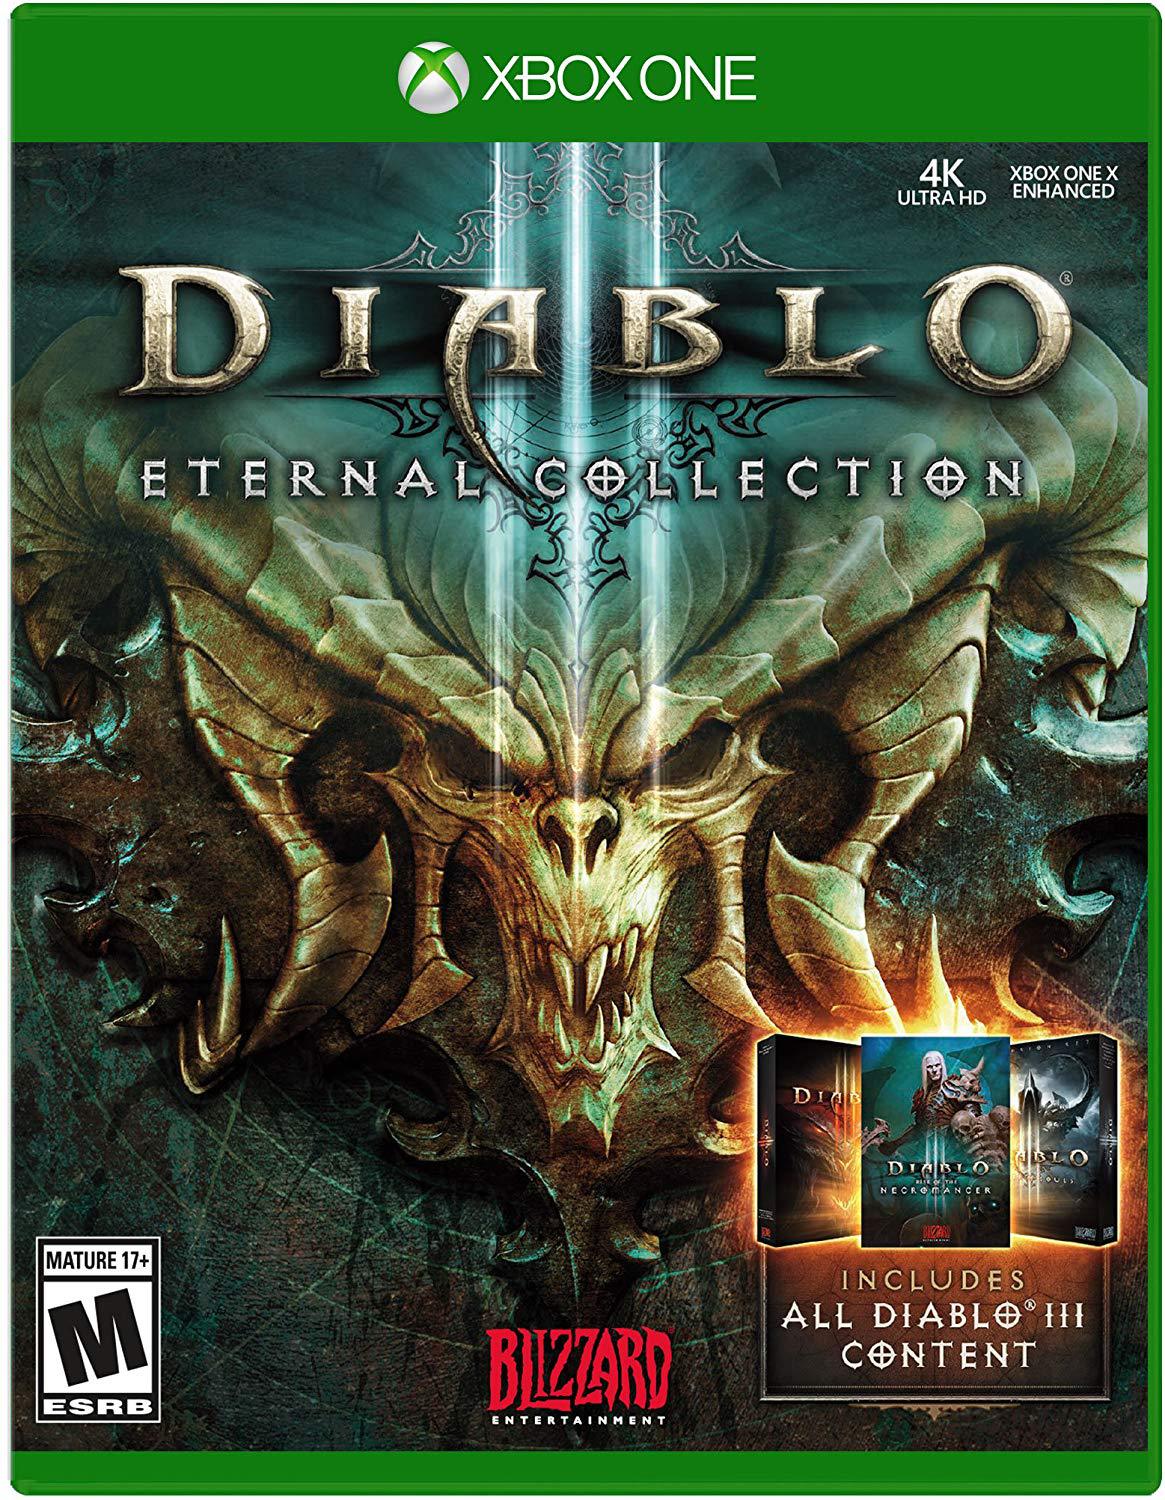 Diablo III 3